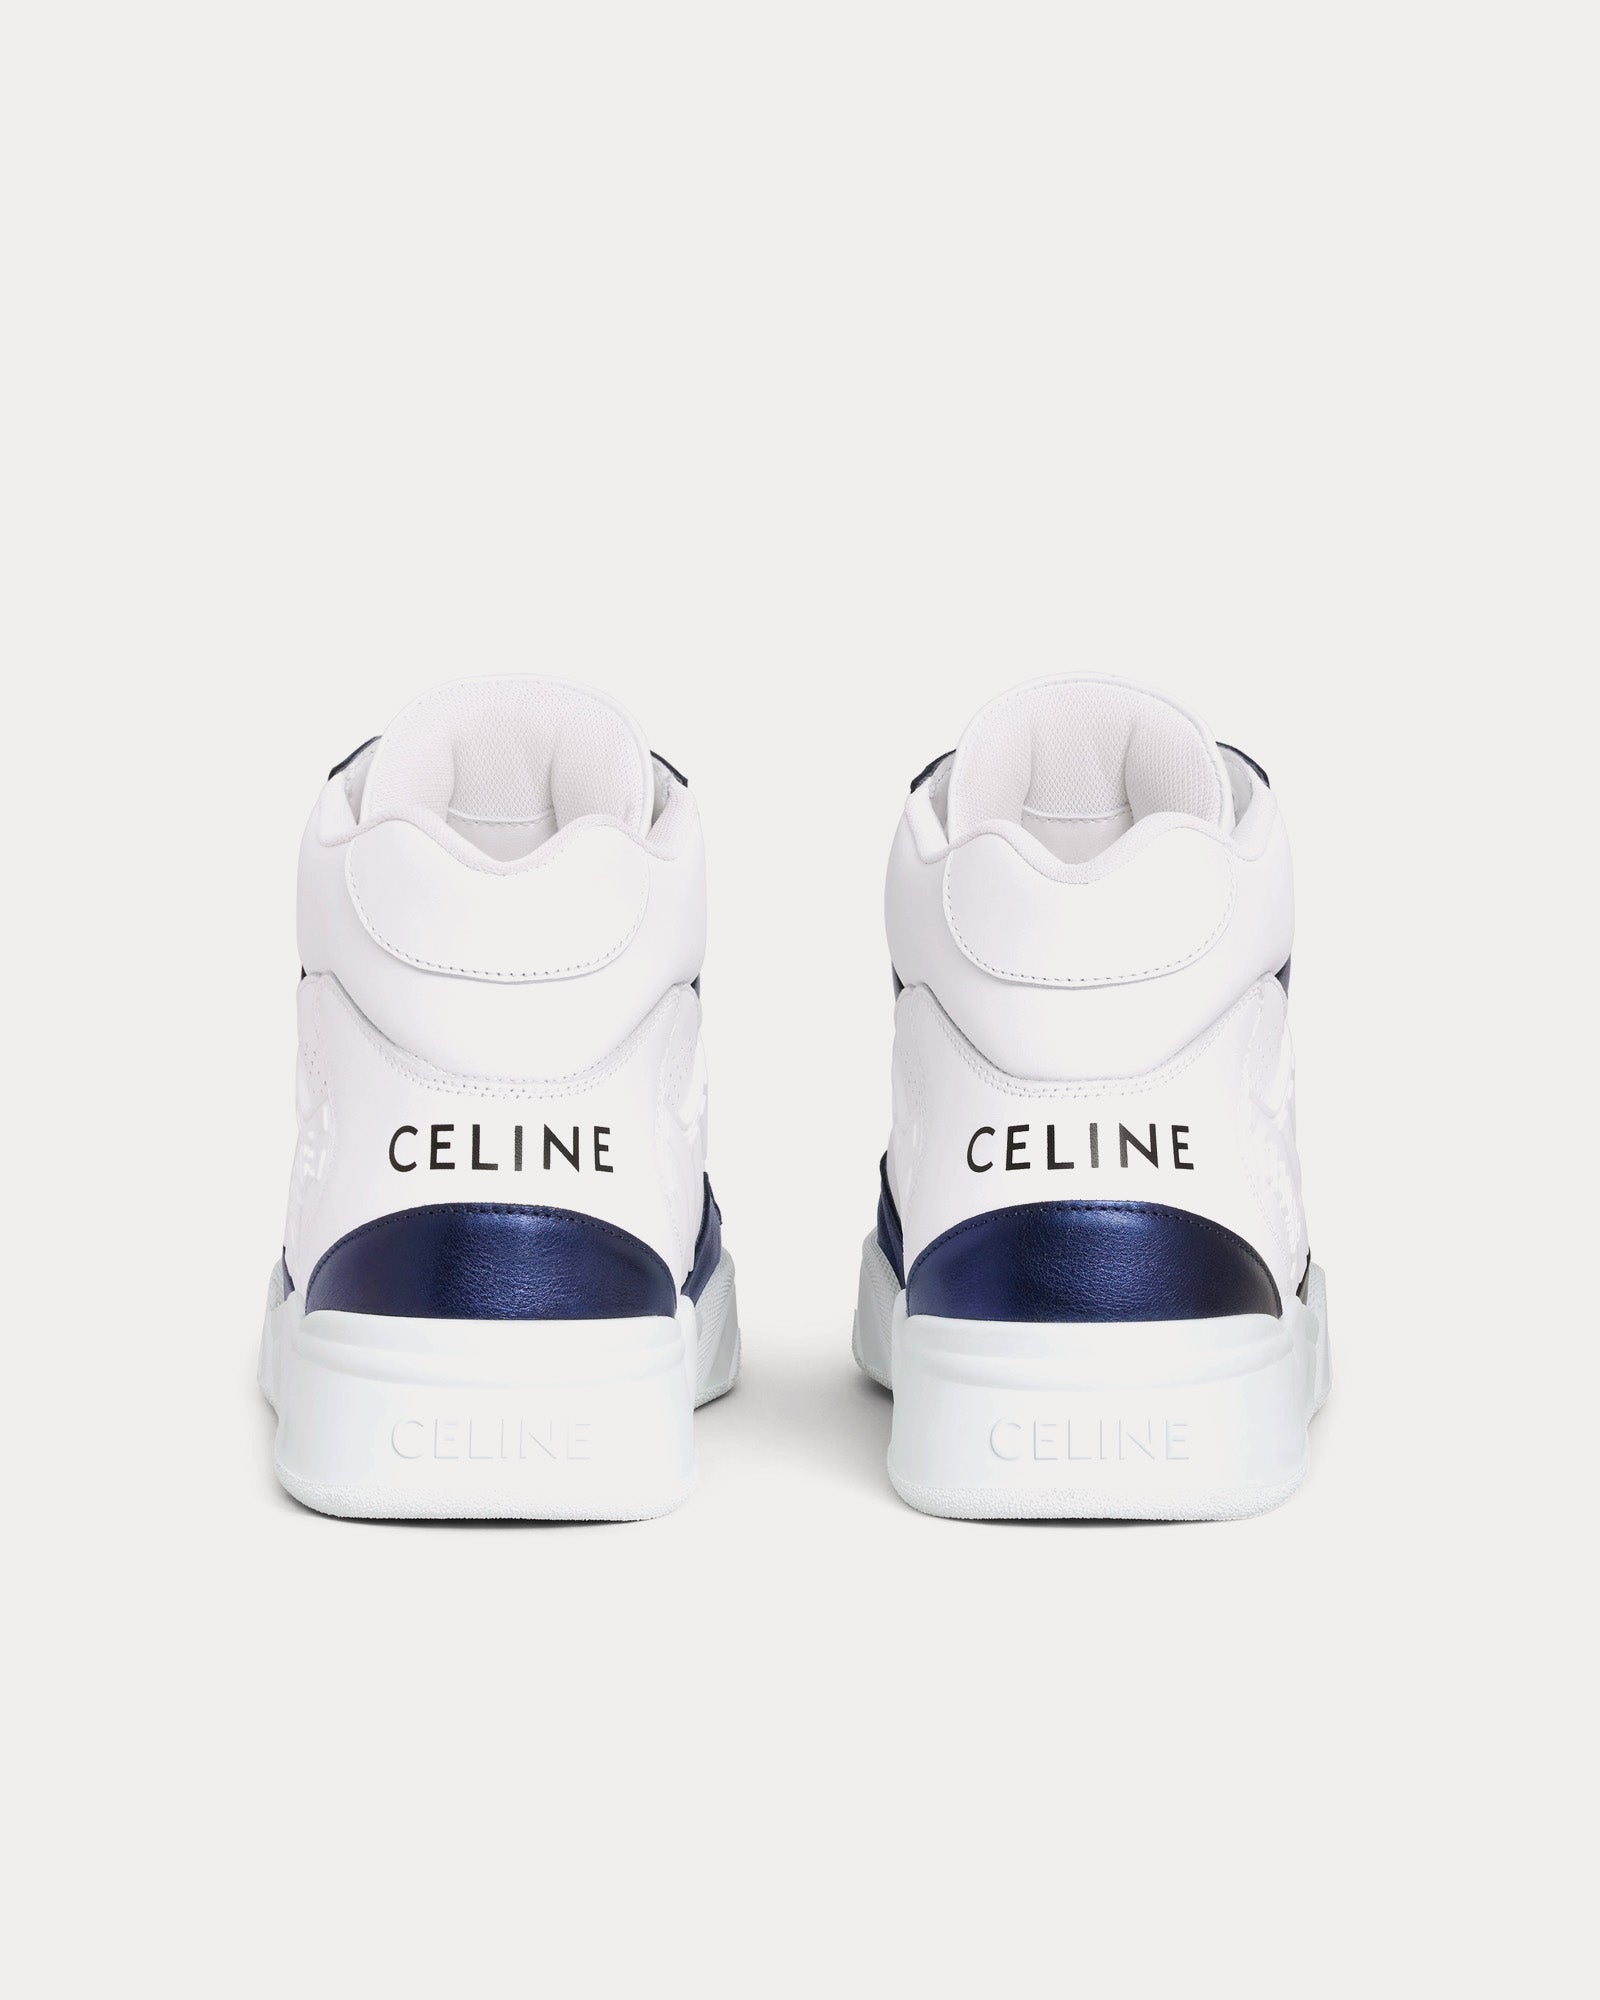 Celine - CT-06 Calfskin & Metallic Calfskin Optic White / Blue High Top Sneakers